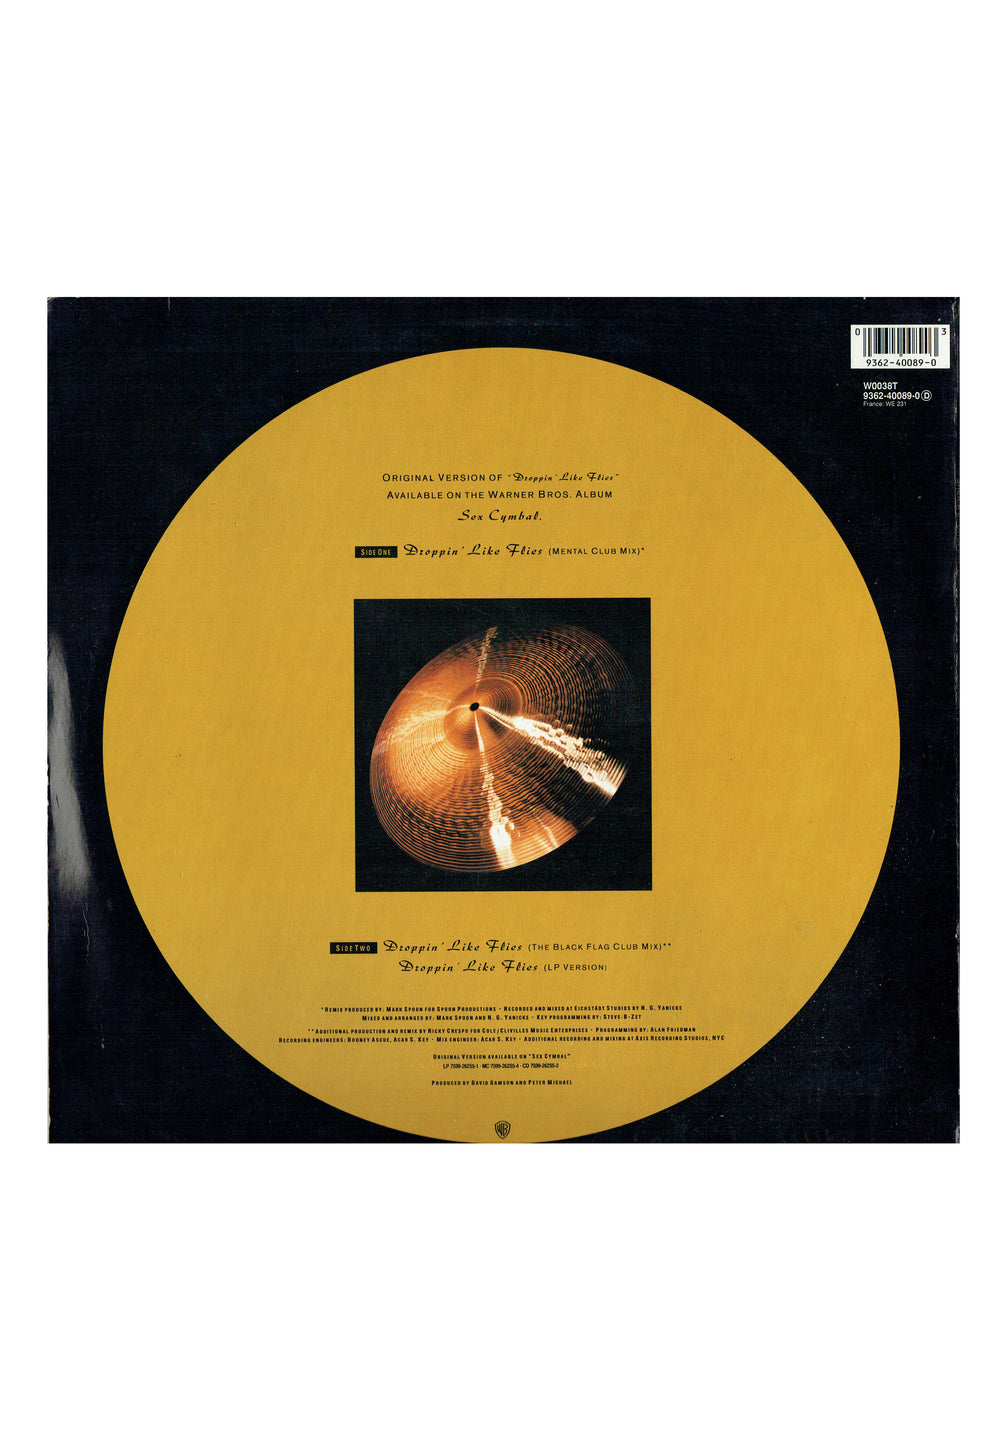 Prince – Sheila E Droppin' Like Flies Vinyl 12" UK Preloved: 1991